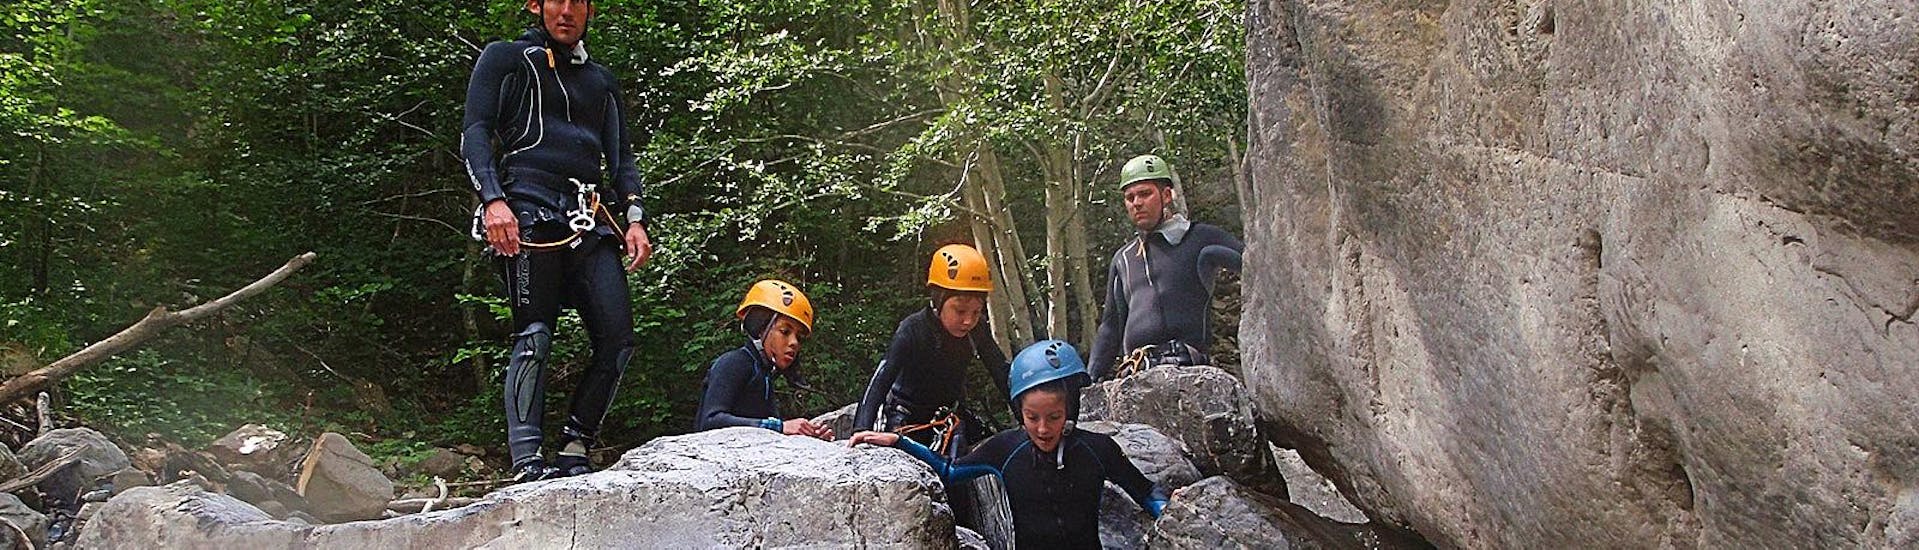 Leichte Canyoning-Tour in Briançon - Ecrins Nationalpark.